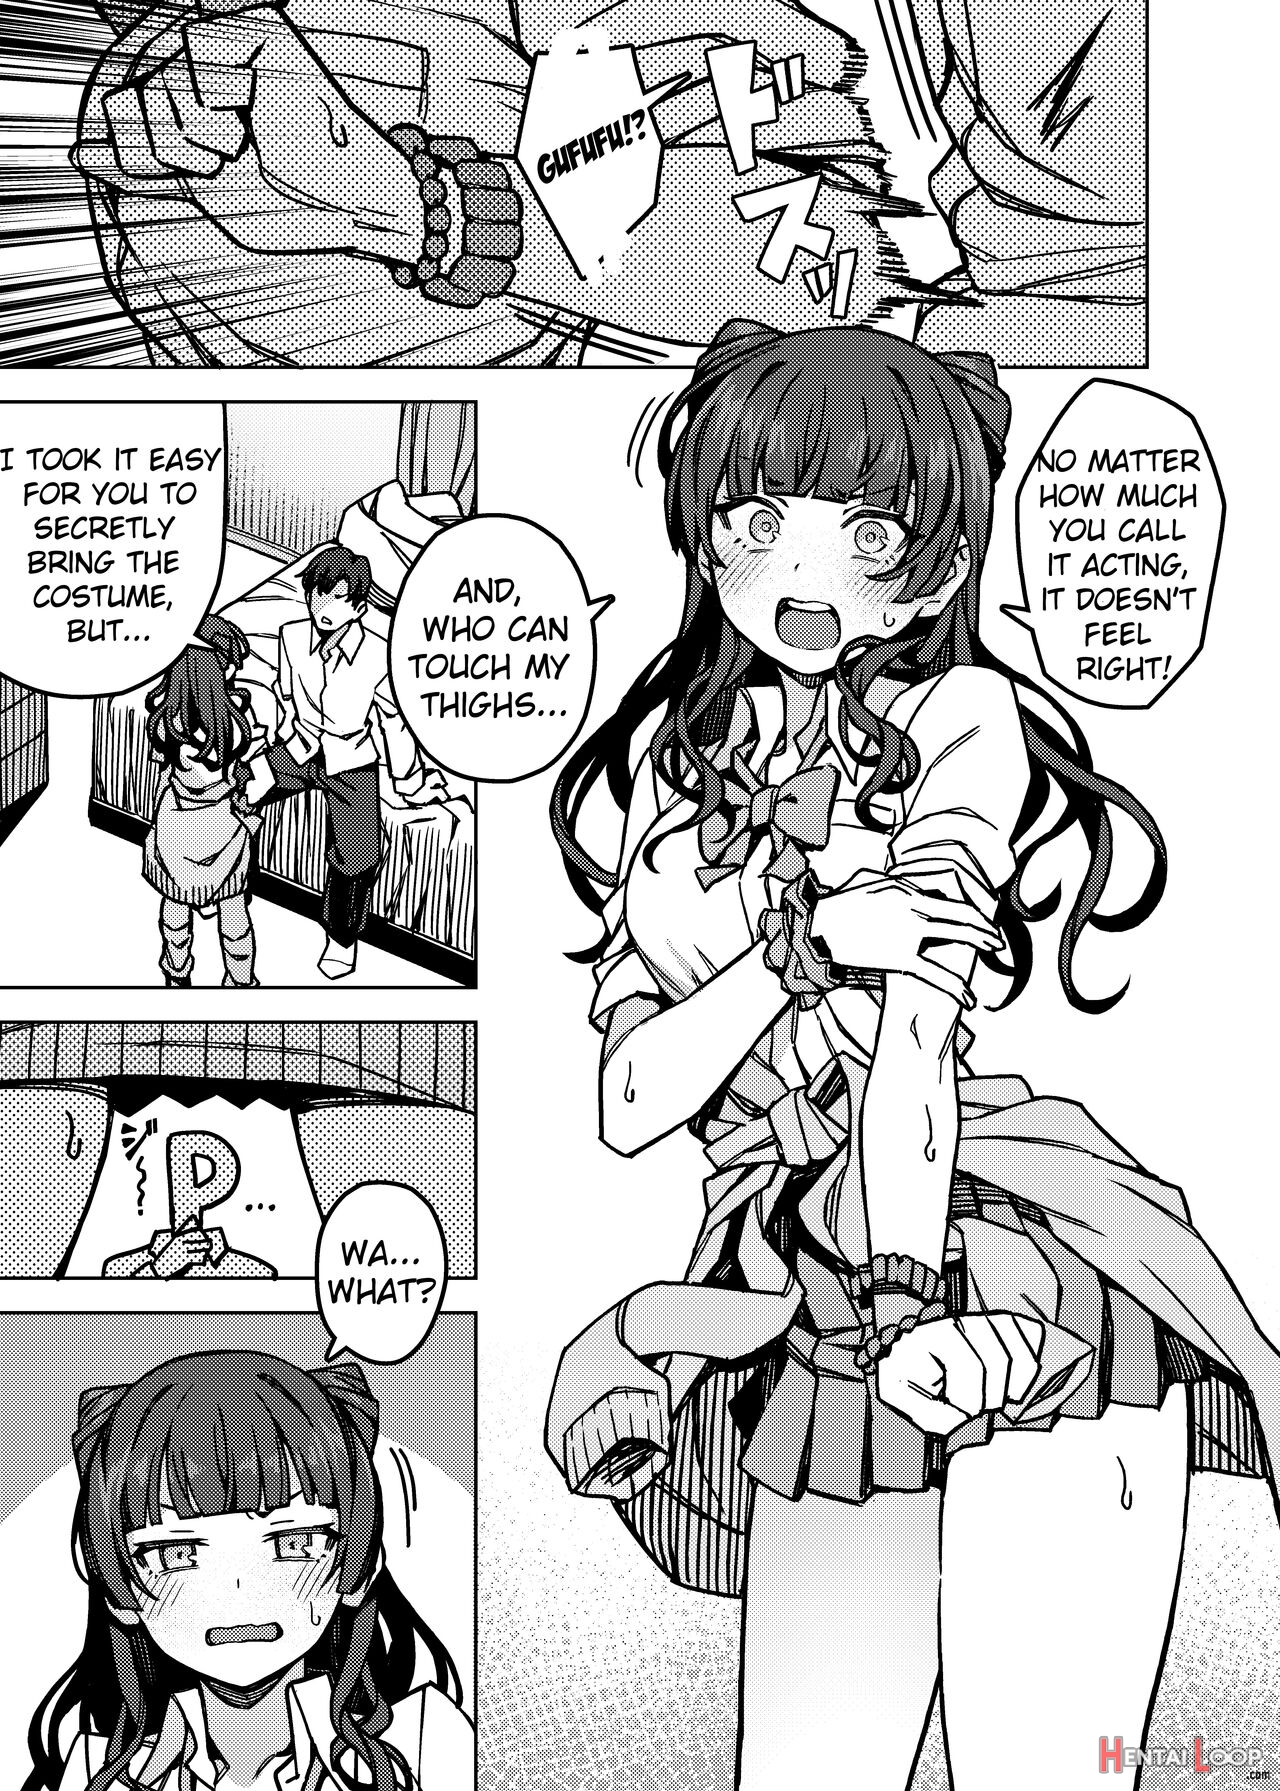 Teach Me! Fuyuko-chan page 5